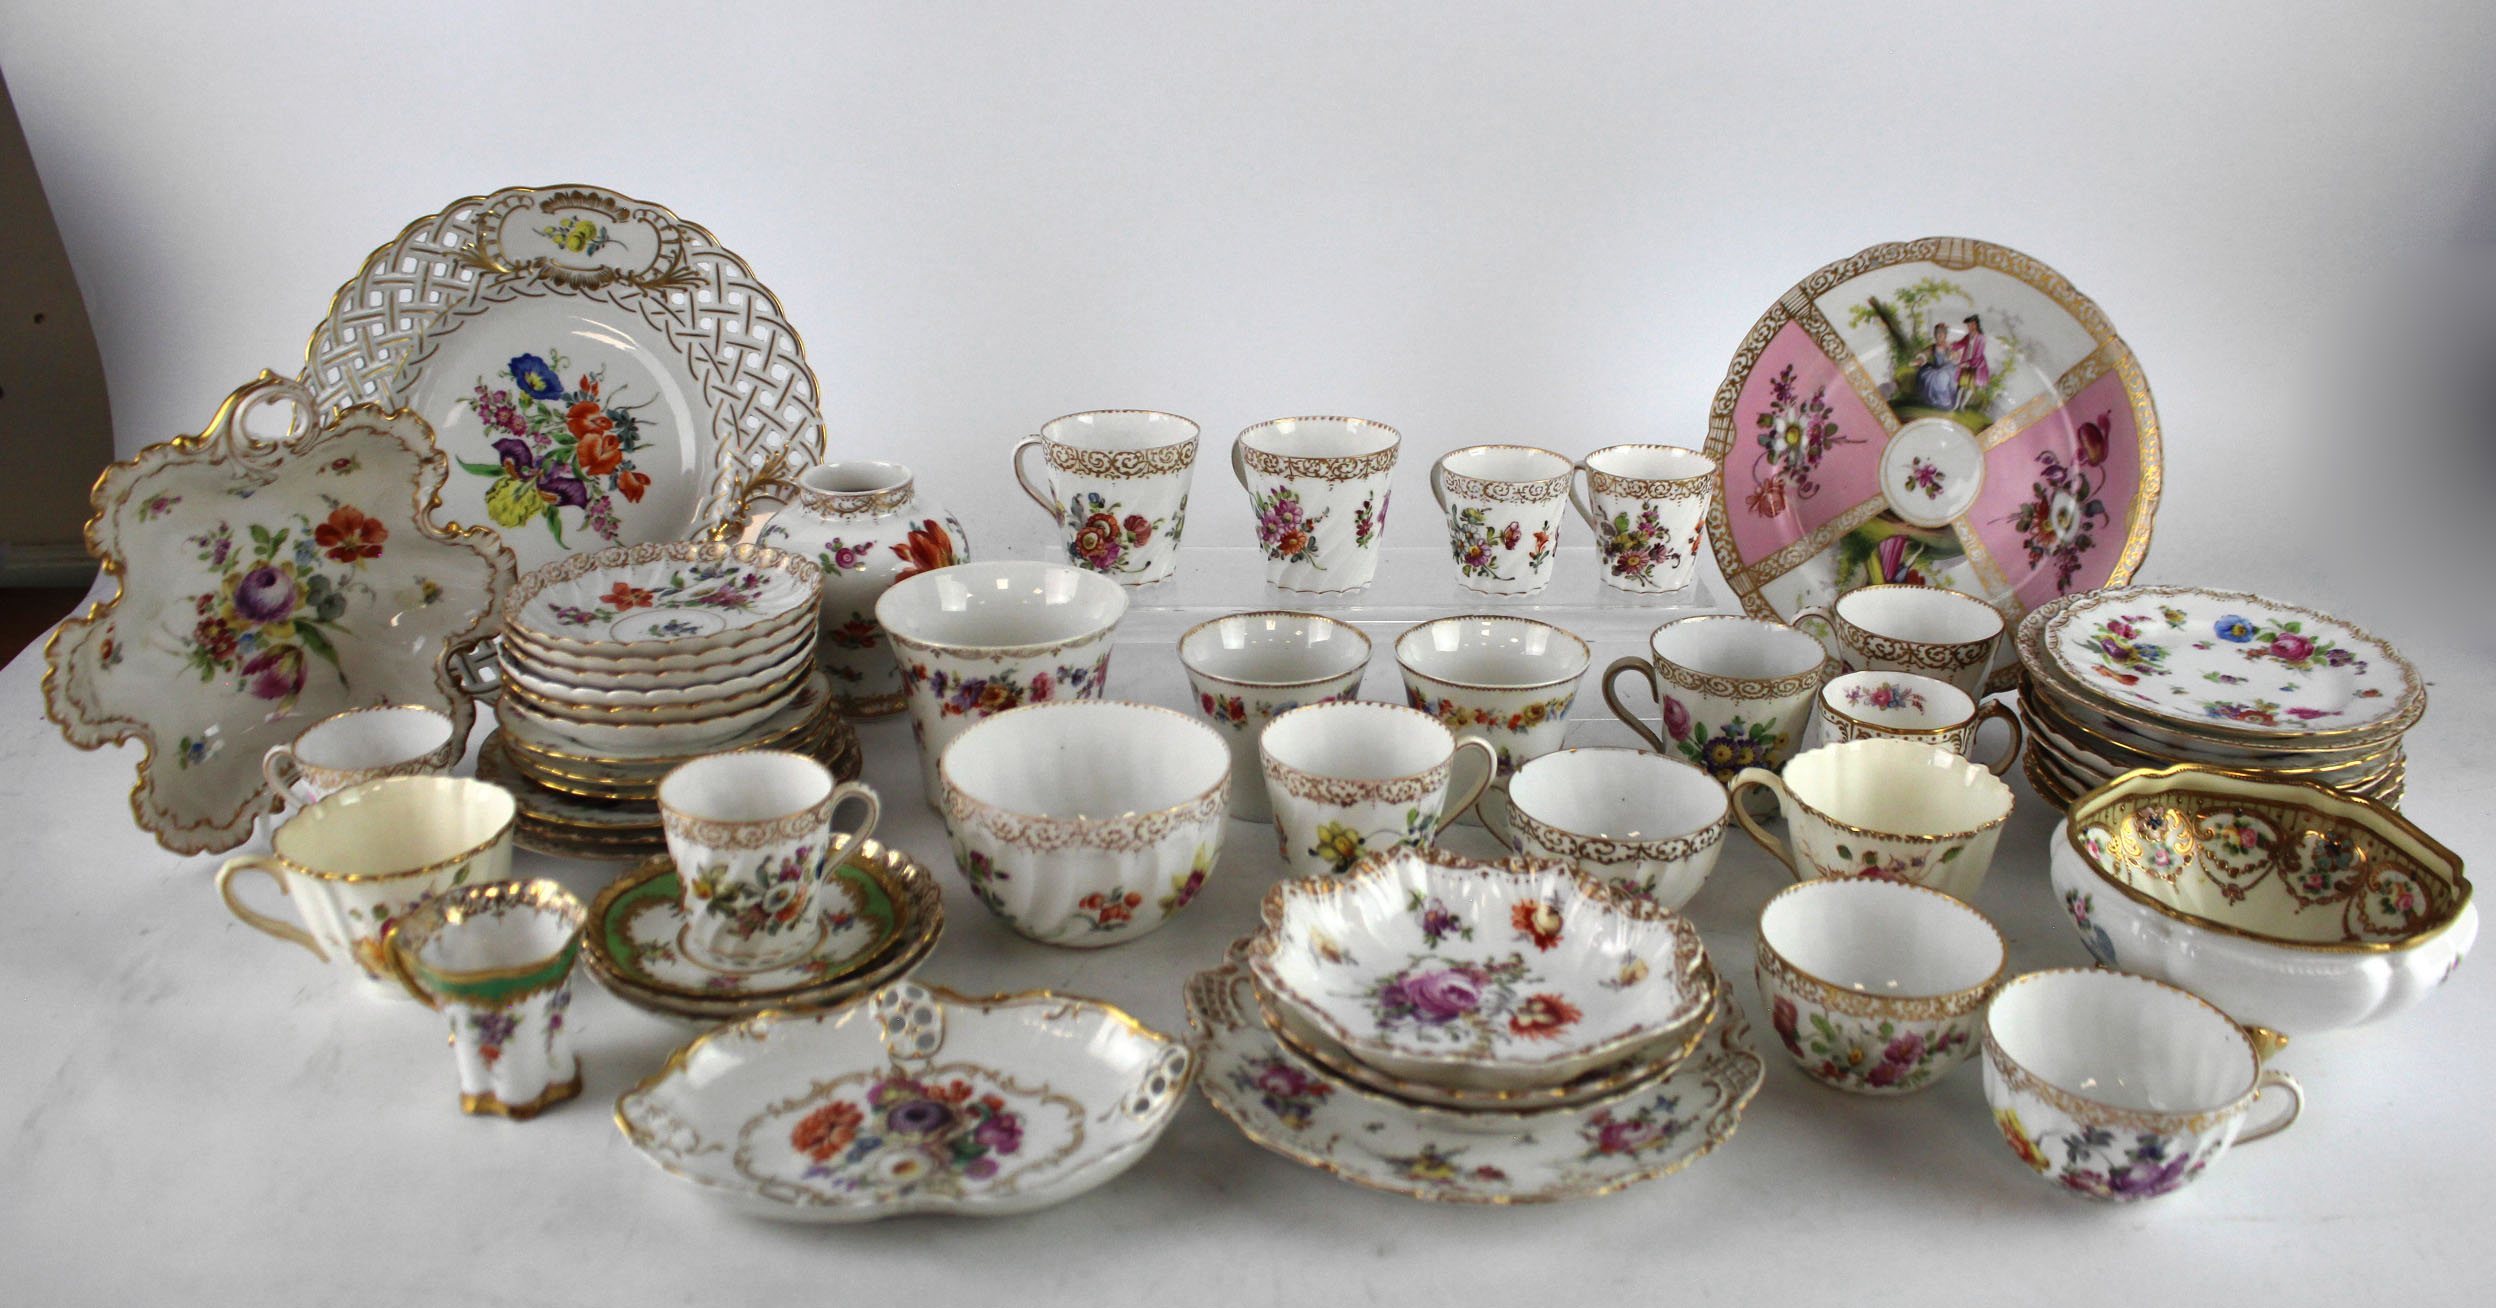 Porcelain. A collection of various porcelain, including Dresden